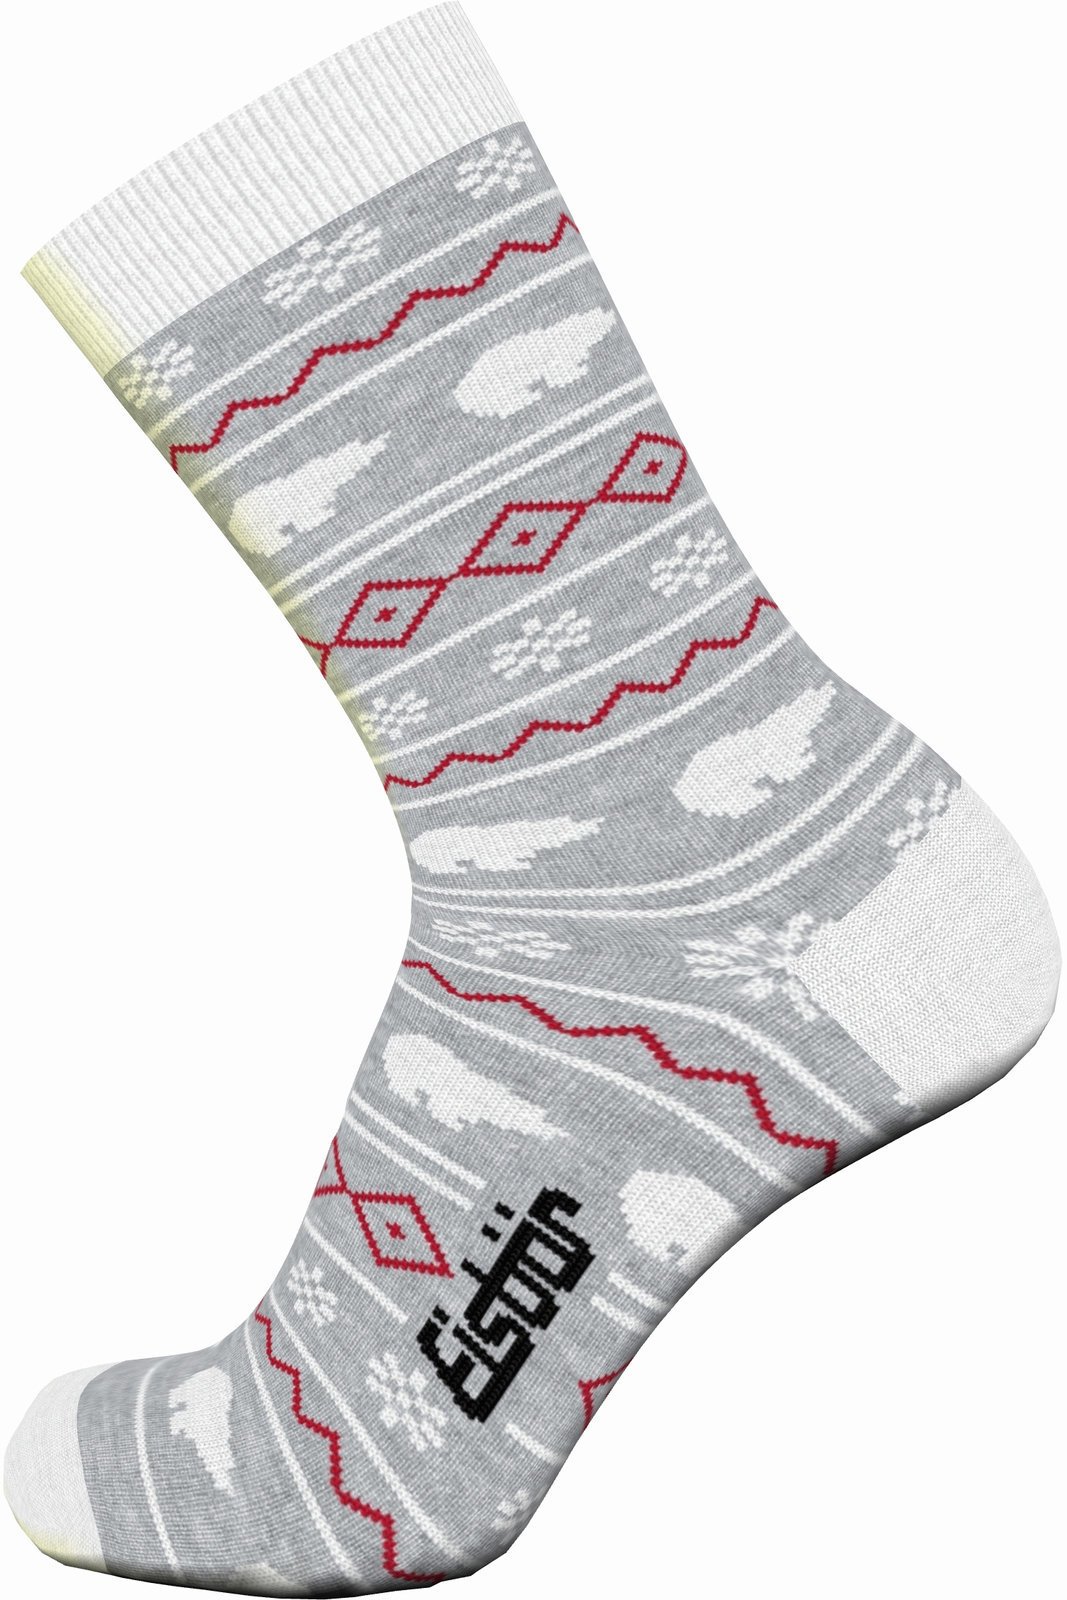 Ski Socks Eisbär Lifestyle Jacquard Grey-Red 31-34 Ski Socks